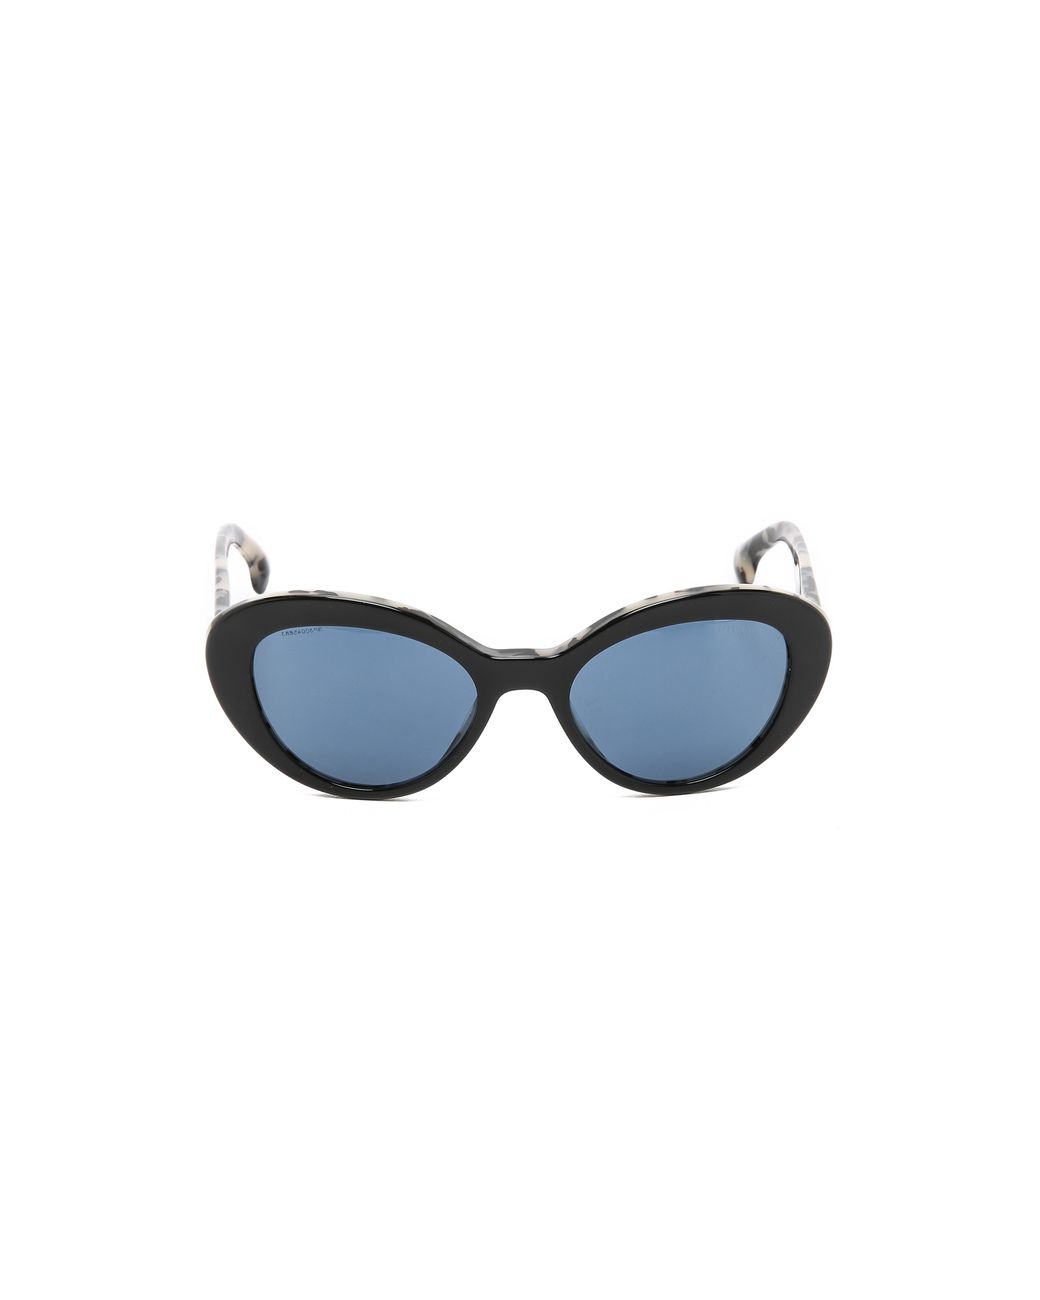 Prada Oval Cat Sunglasses in Black | Lyst